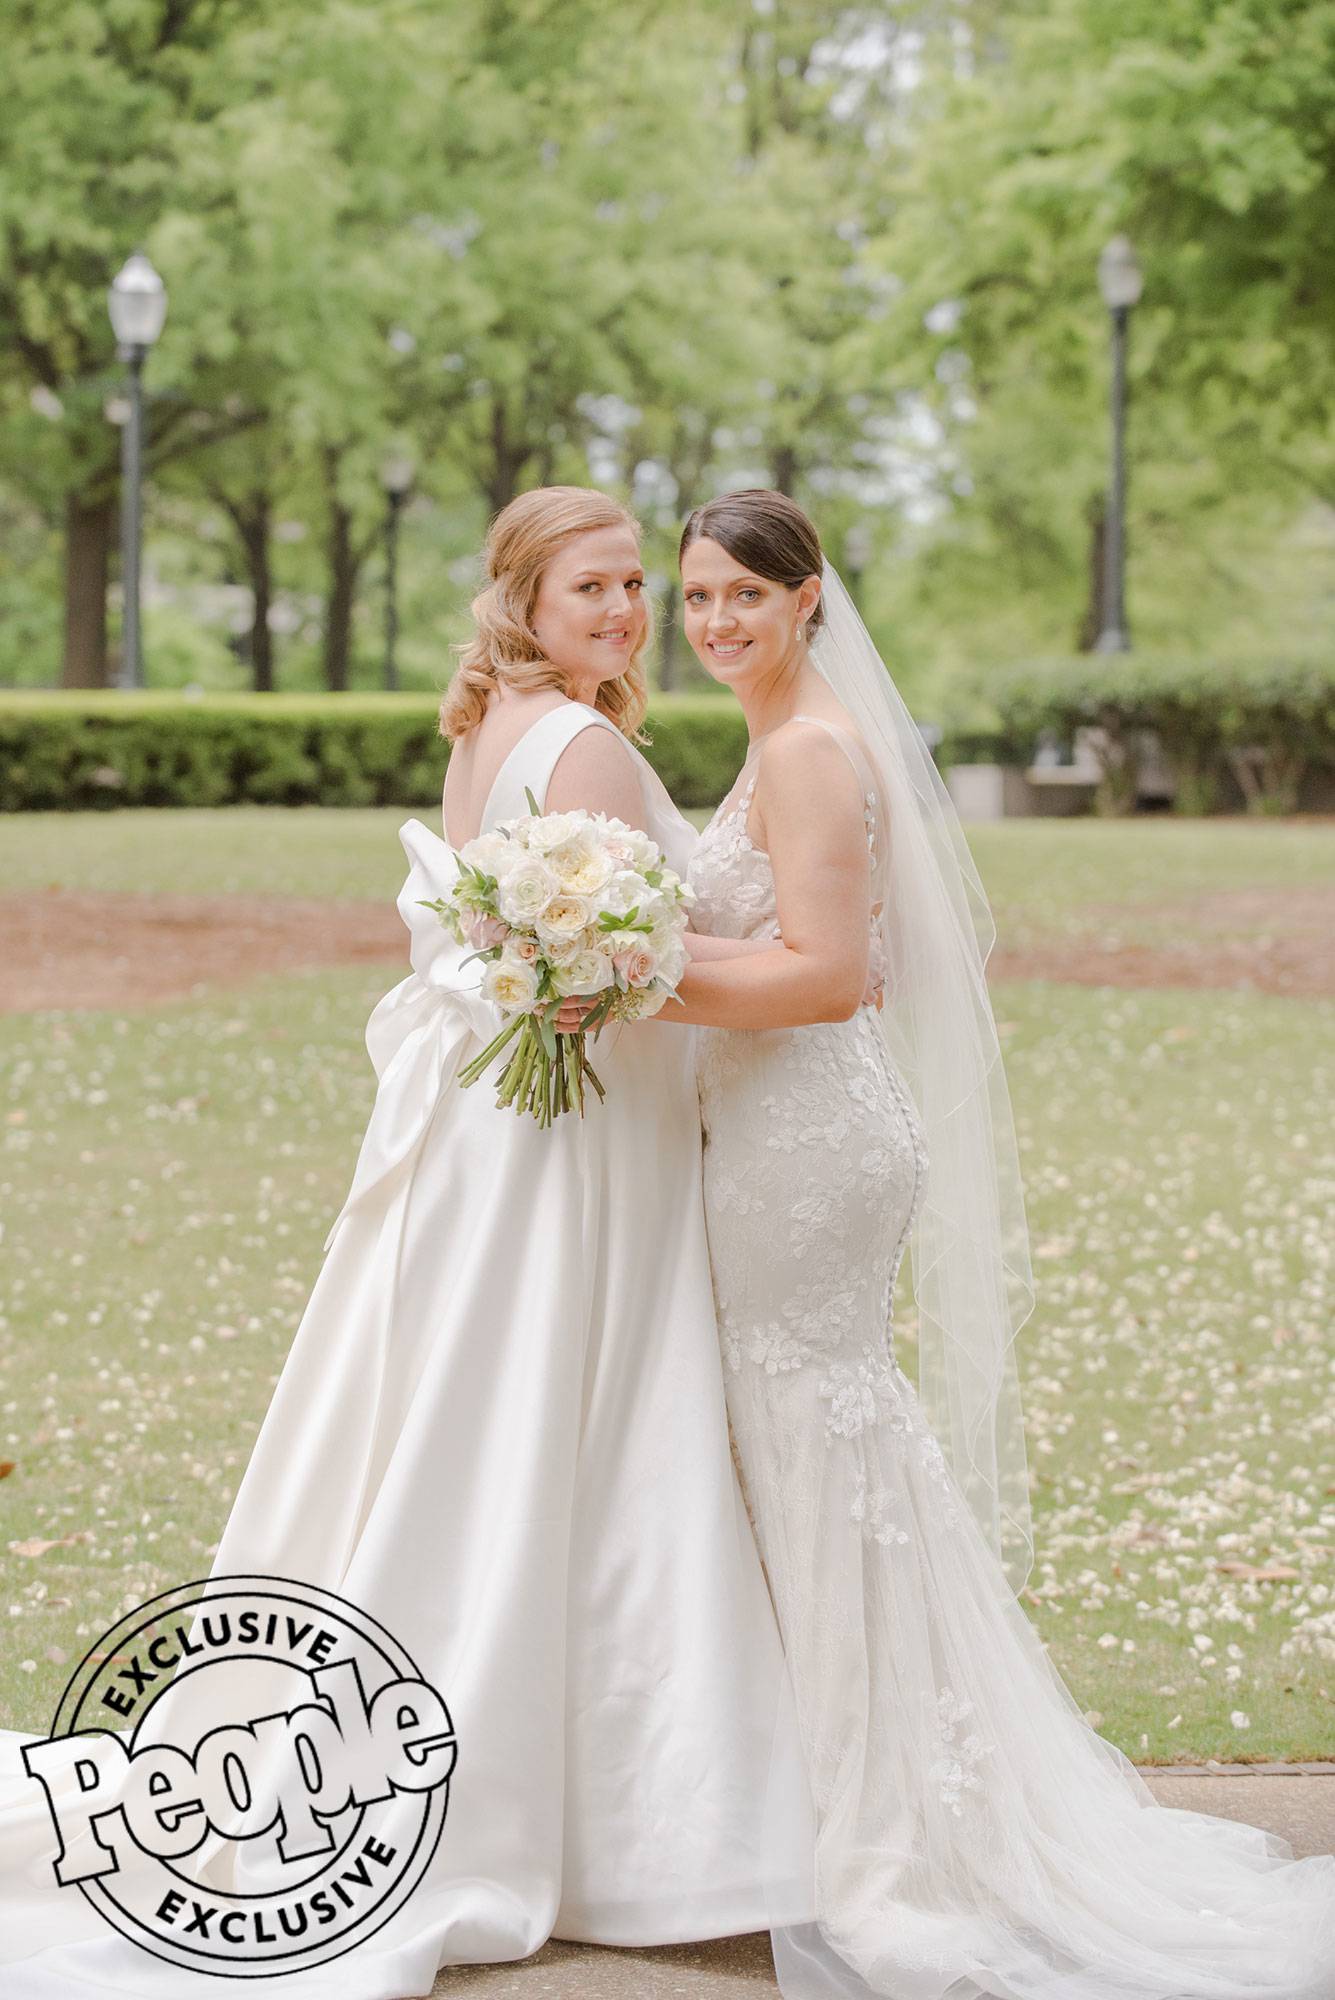 Celebrity lesbian wedding news: former Miss America winner Deidre Downs Gunn marries Abbott Jones in Alabama | Photo by Kelli & Daniel Taylor Photography | same-sex weddings LGBTQ weddings